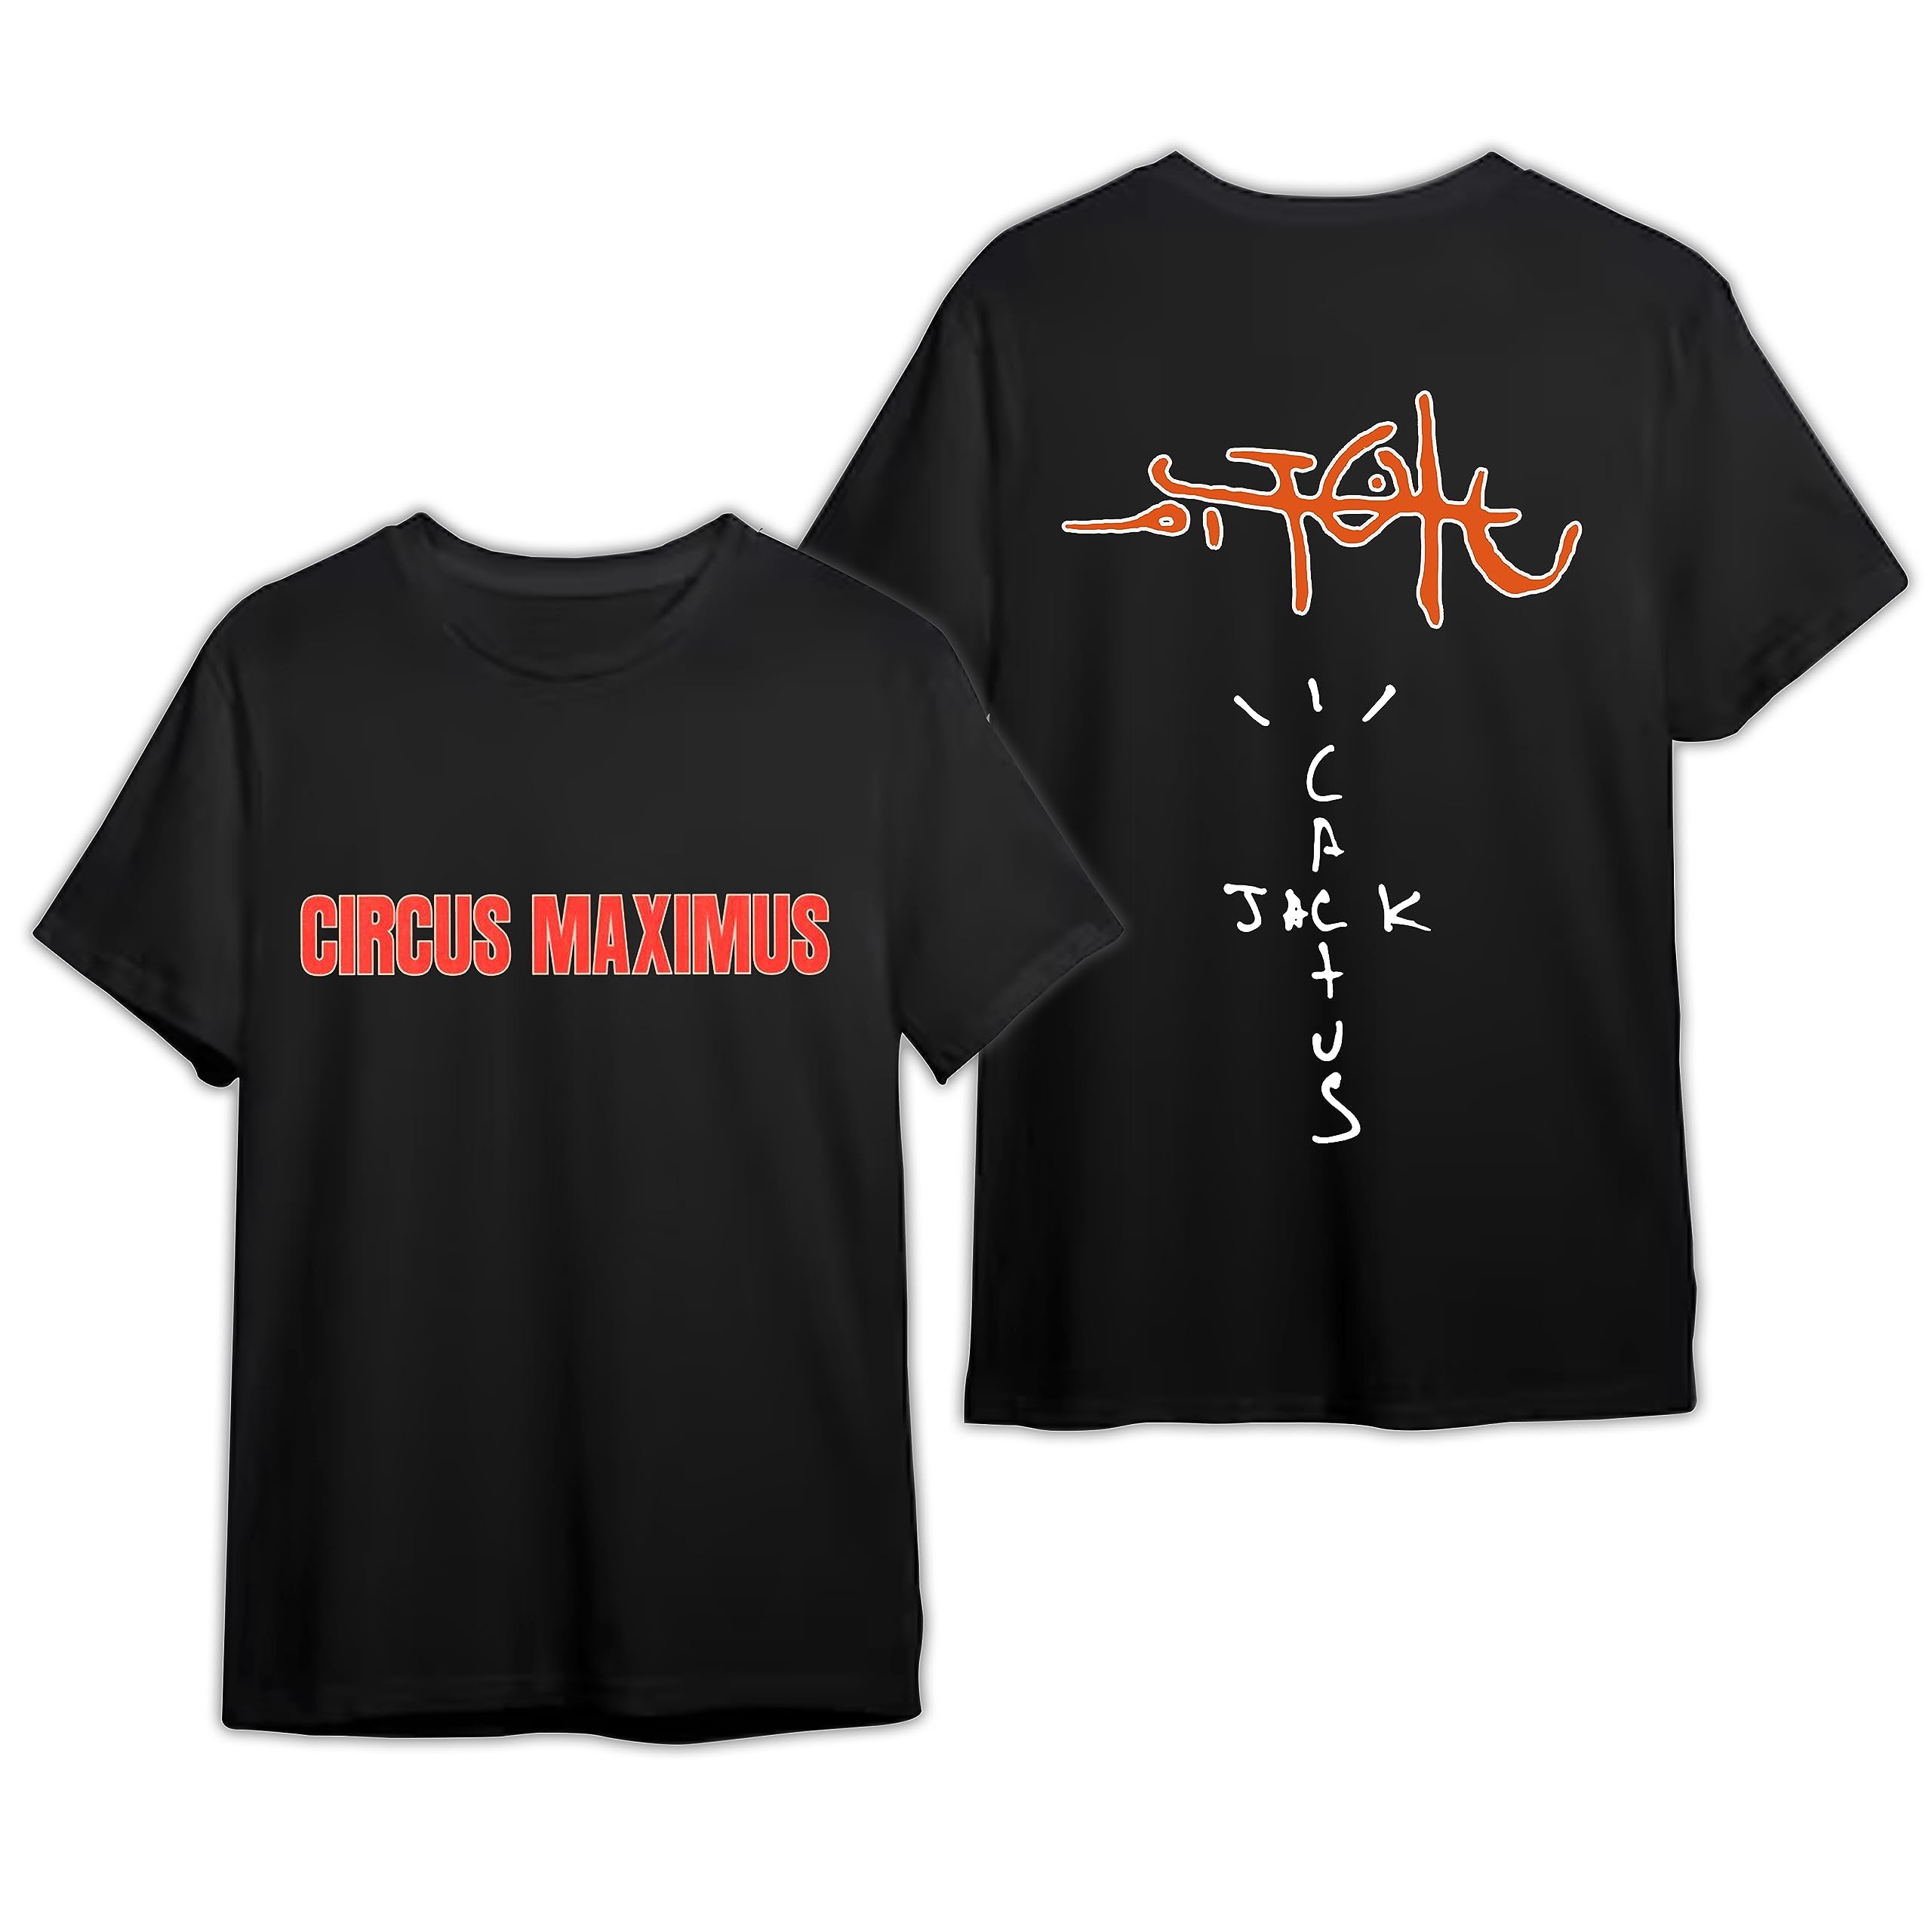 Traviss Scottss Shirt, Circus MaximusSS Tshirt, Utopia Shirt, Hip Hop Rap Shirt